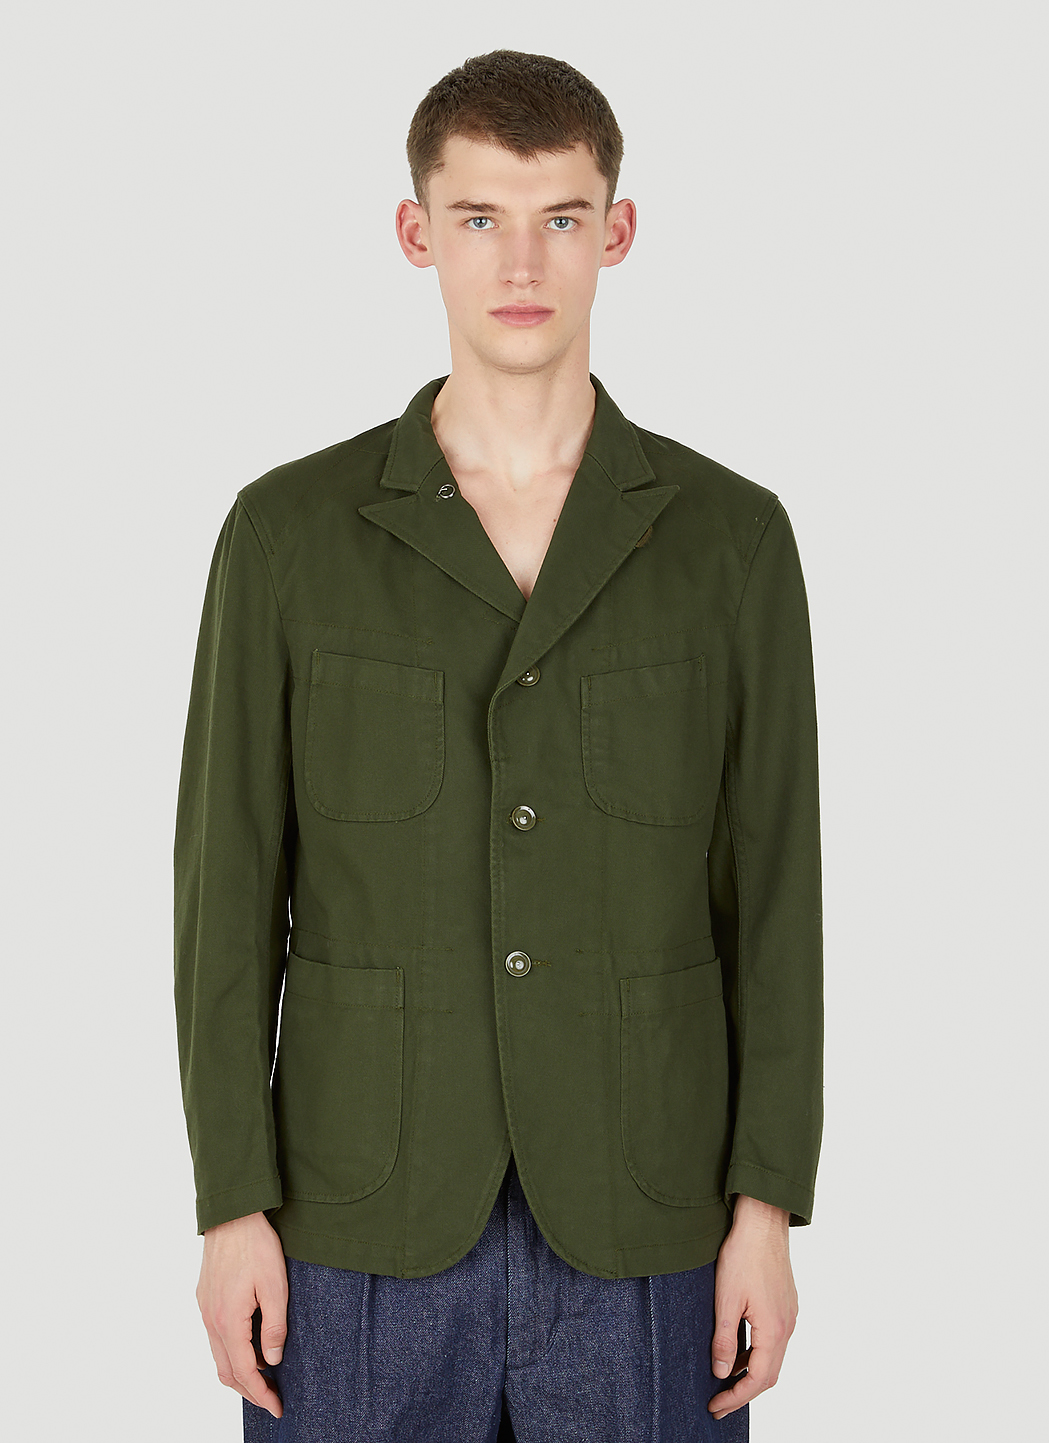 Engineered Garments Bedford Jacket in Green | LN-CC